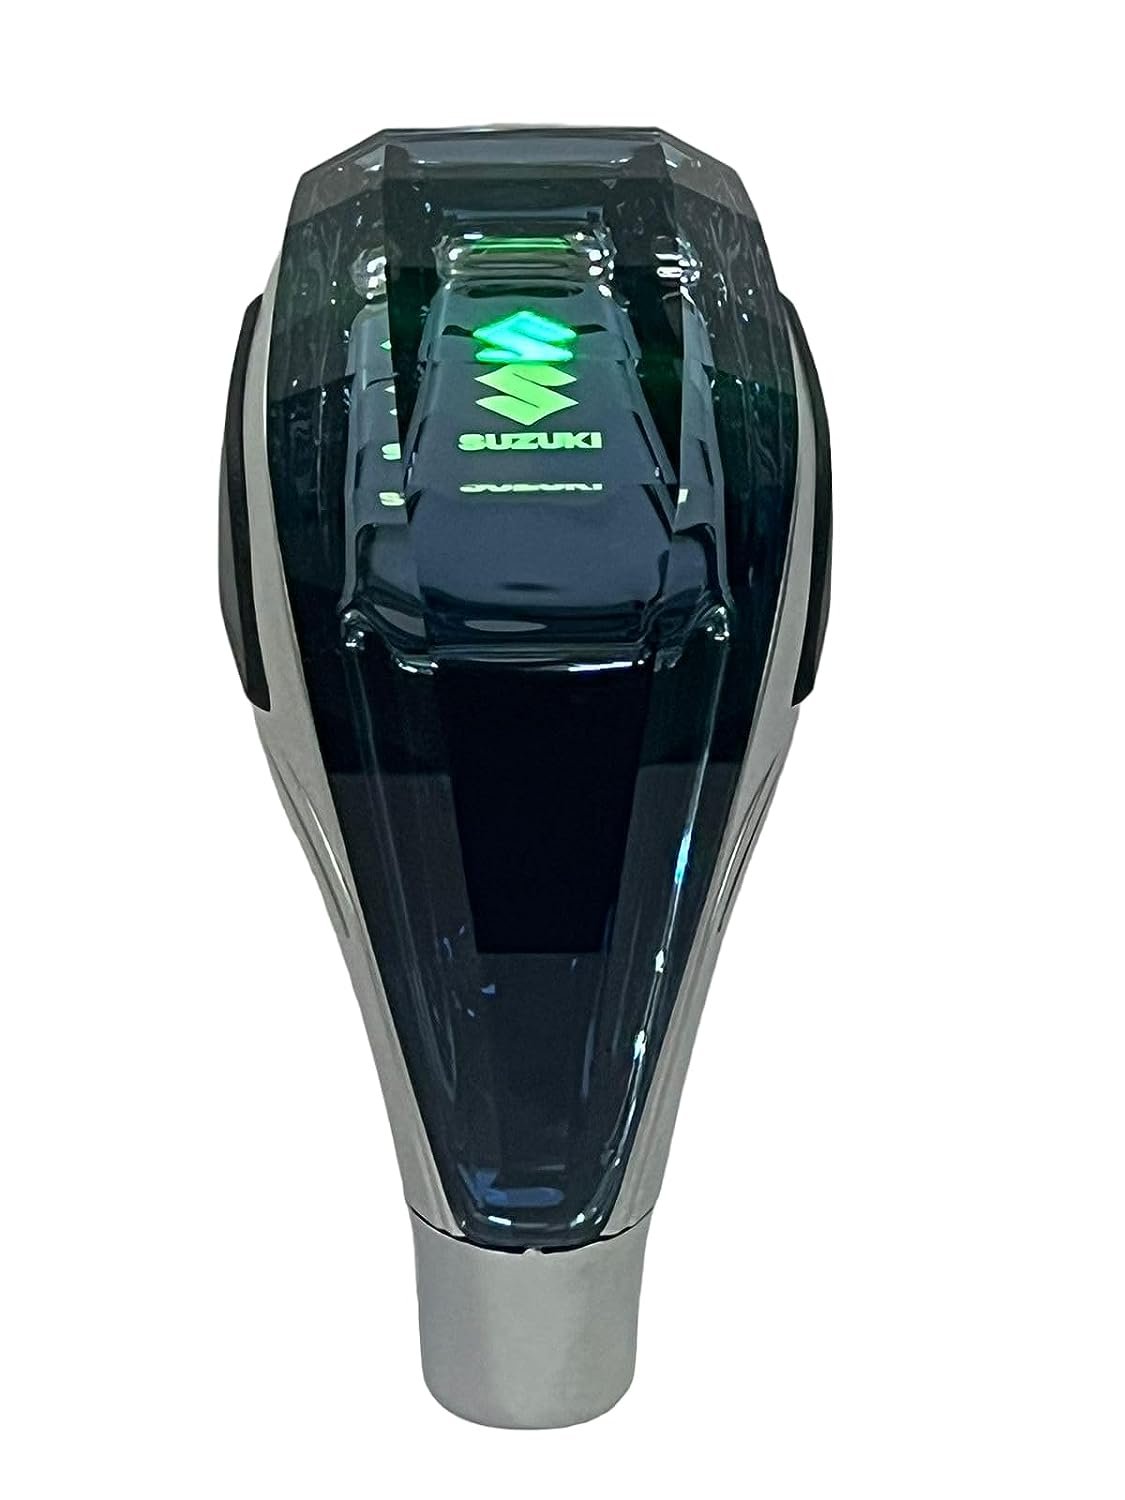 Crystal Shape Car LED Handball Crystal Shift Knob Shift Lever 7 Color Lights Illumination Touch Sensor Line Lighting Compatible with Suz-uki Car Image 